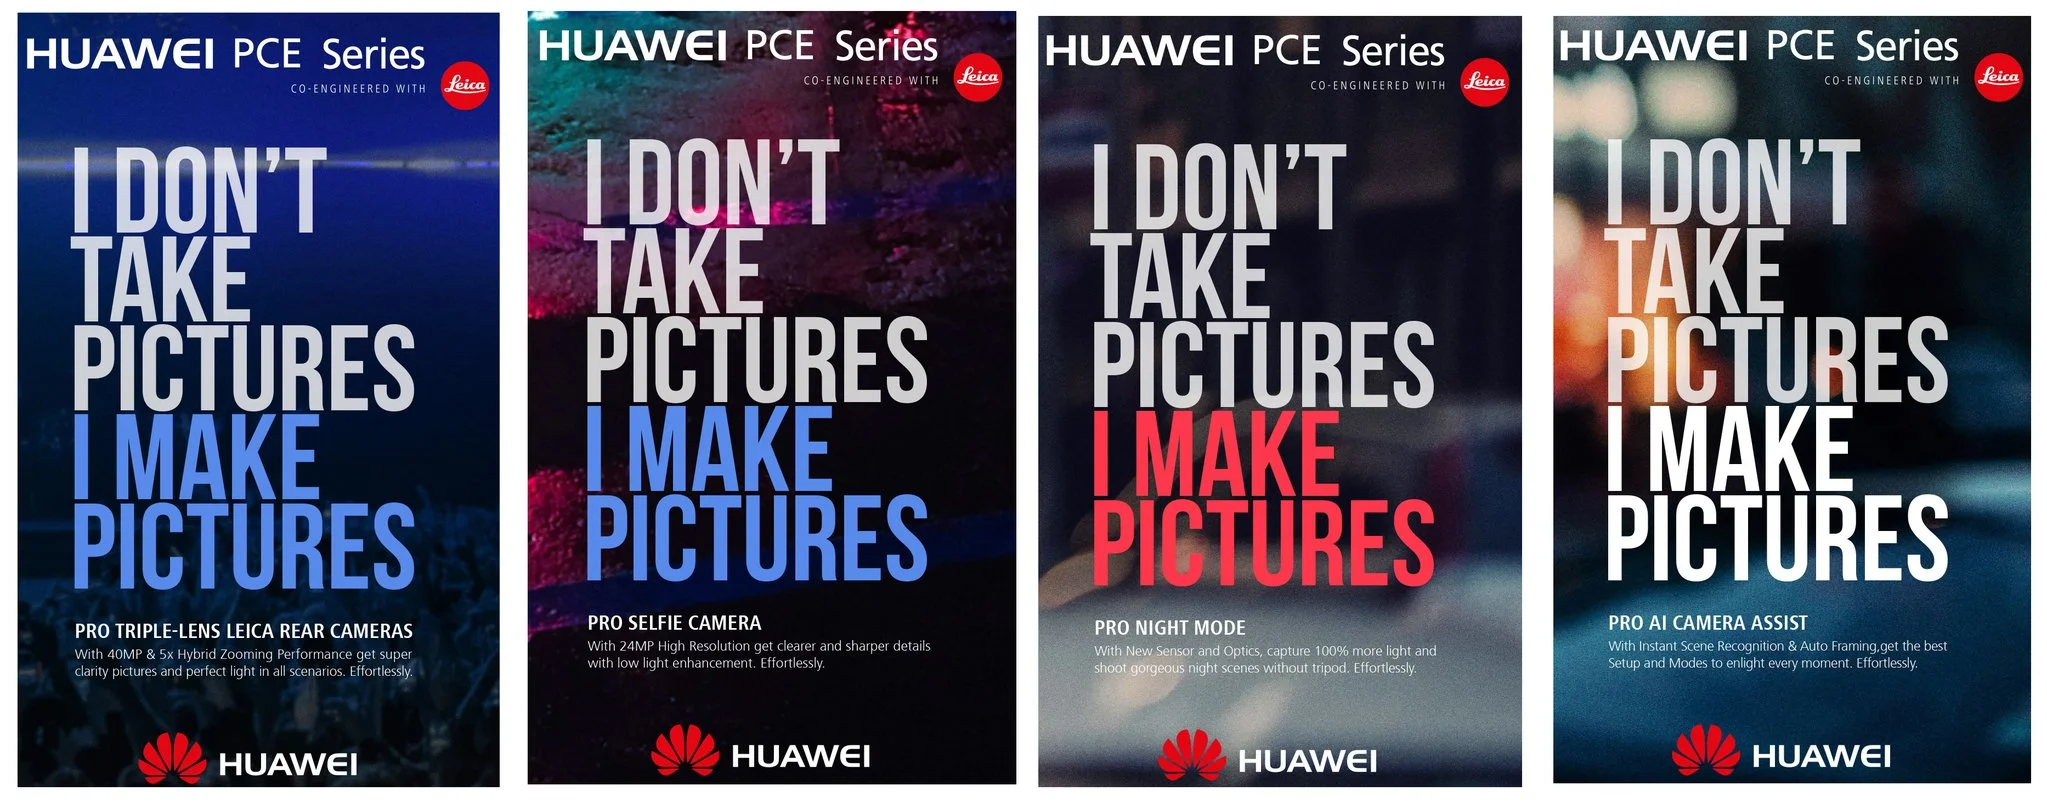 Huawei P11 может получить камеру на 40 Мп - фото 1